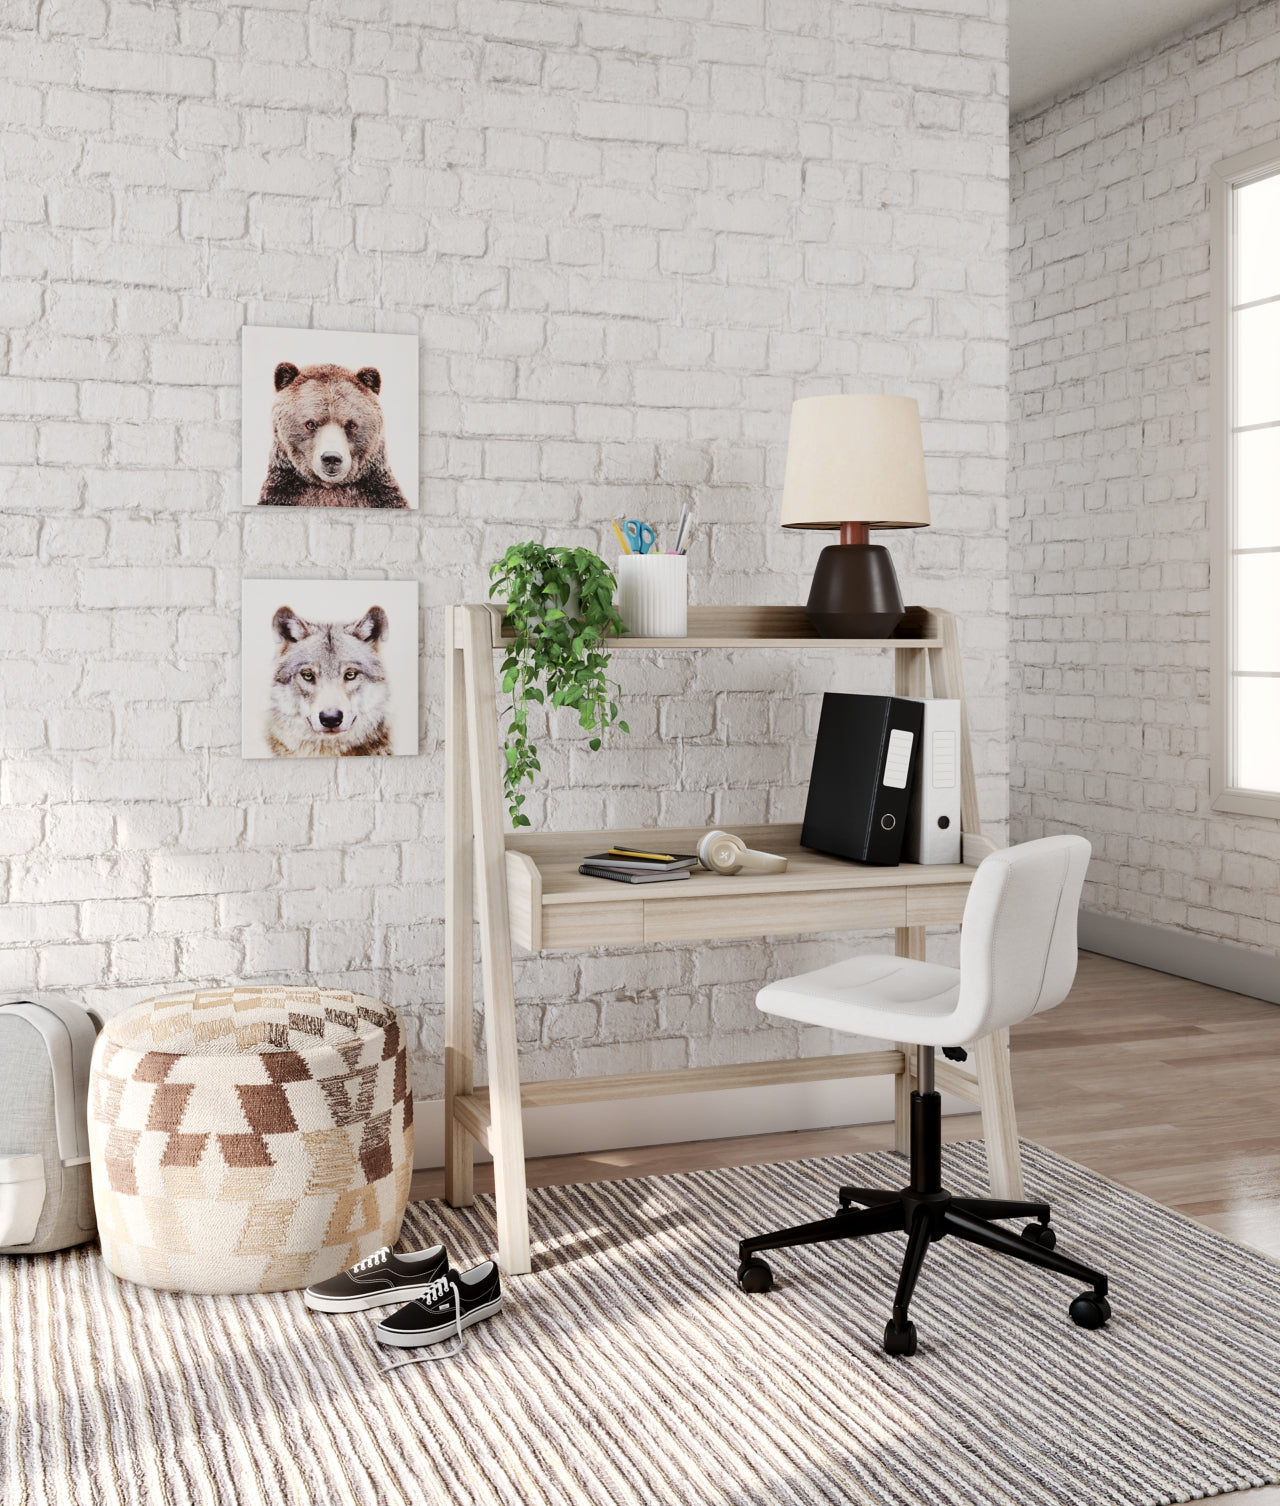 Blariden Desk with Hutch - furniture place usa